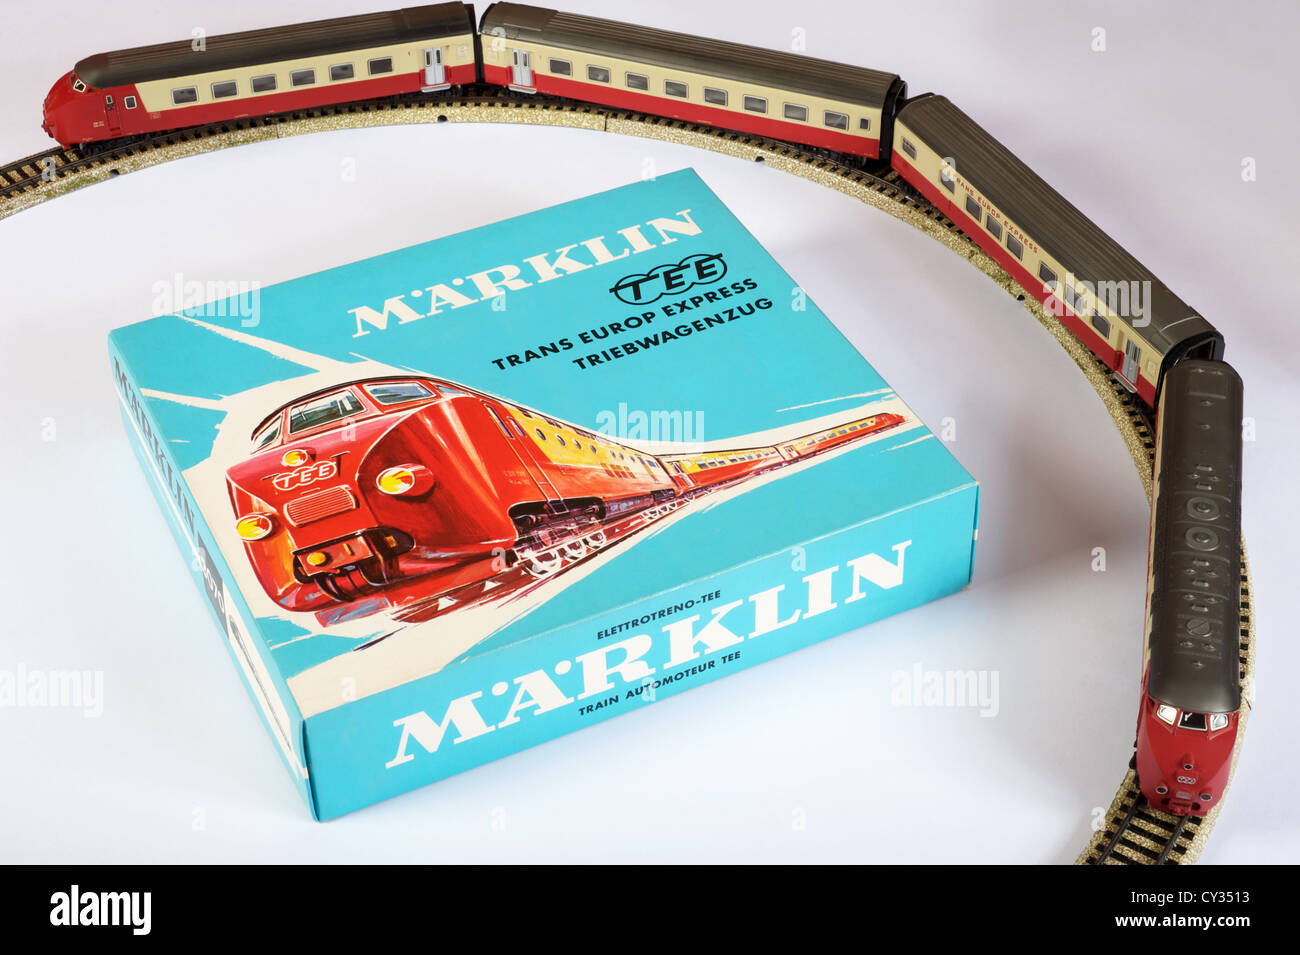 Marklin TEE (Trans Europe Express) electric model railway set Stock Photo -  Alamy